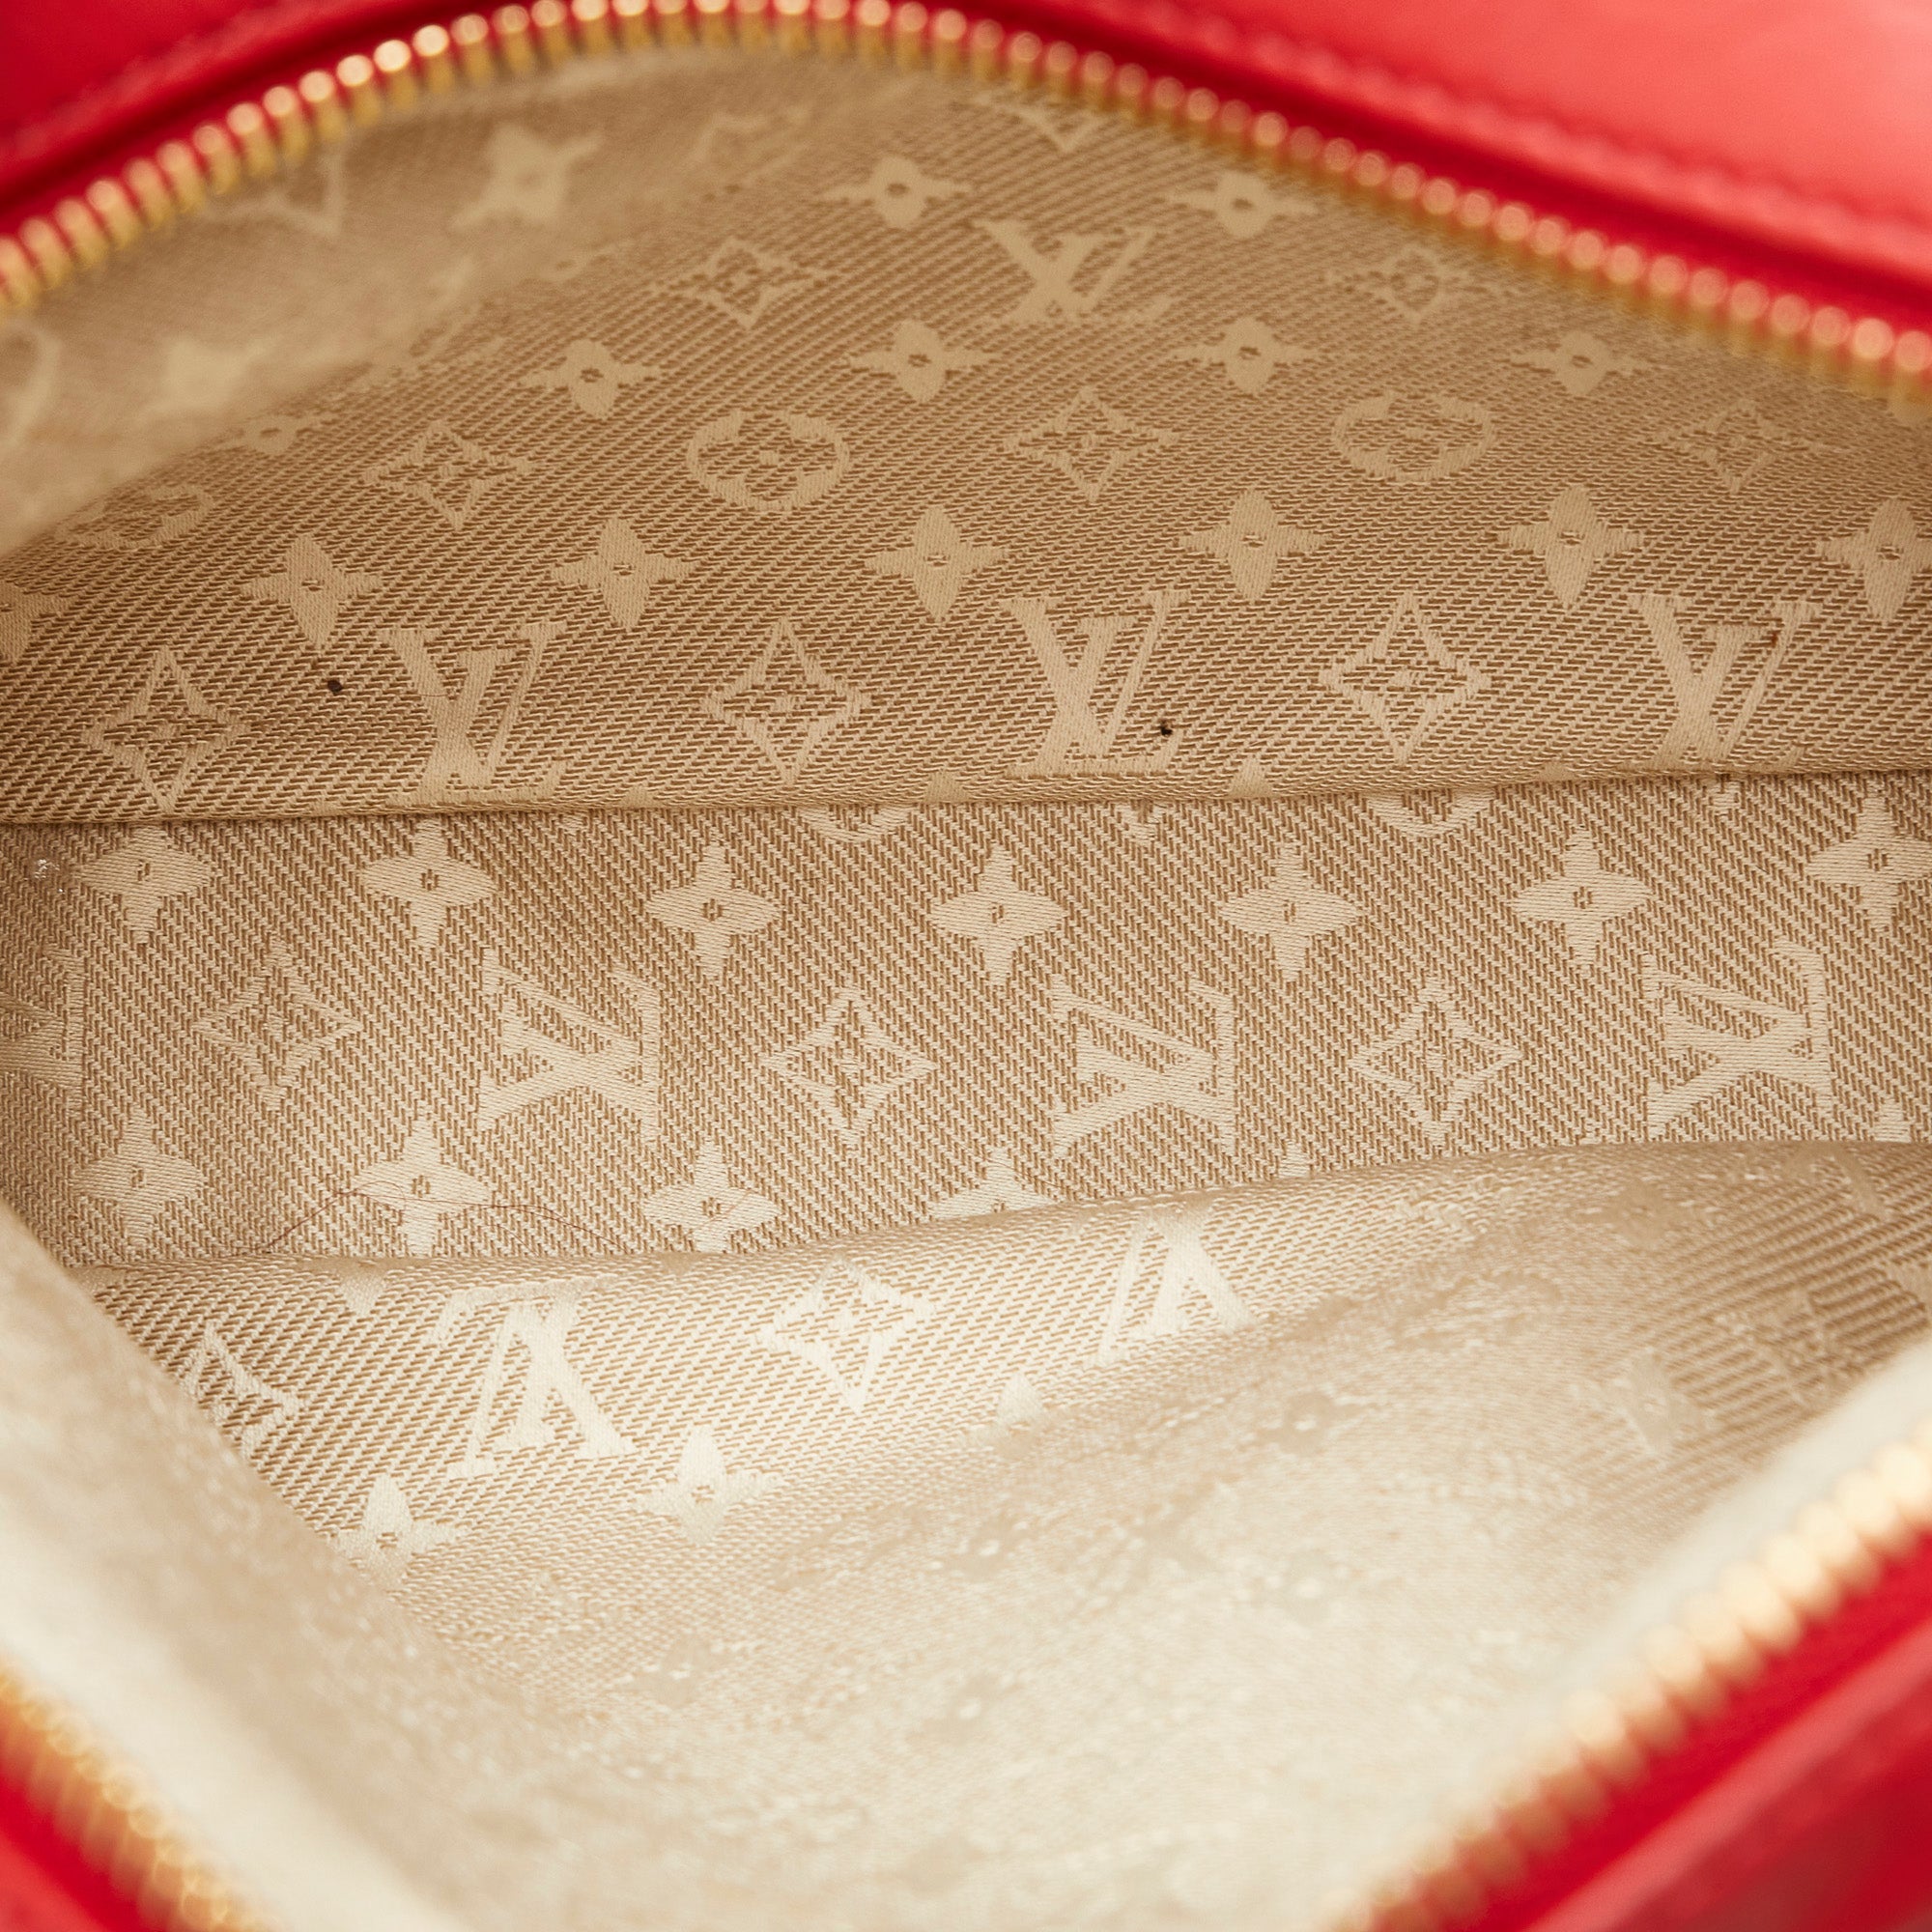 Red Louis Vuitton Flight Paname Takeoff Bag – Designer Revival